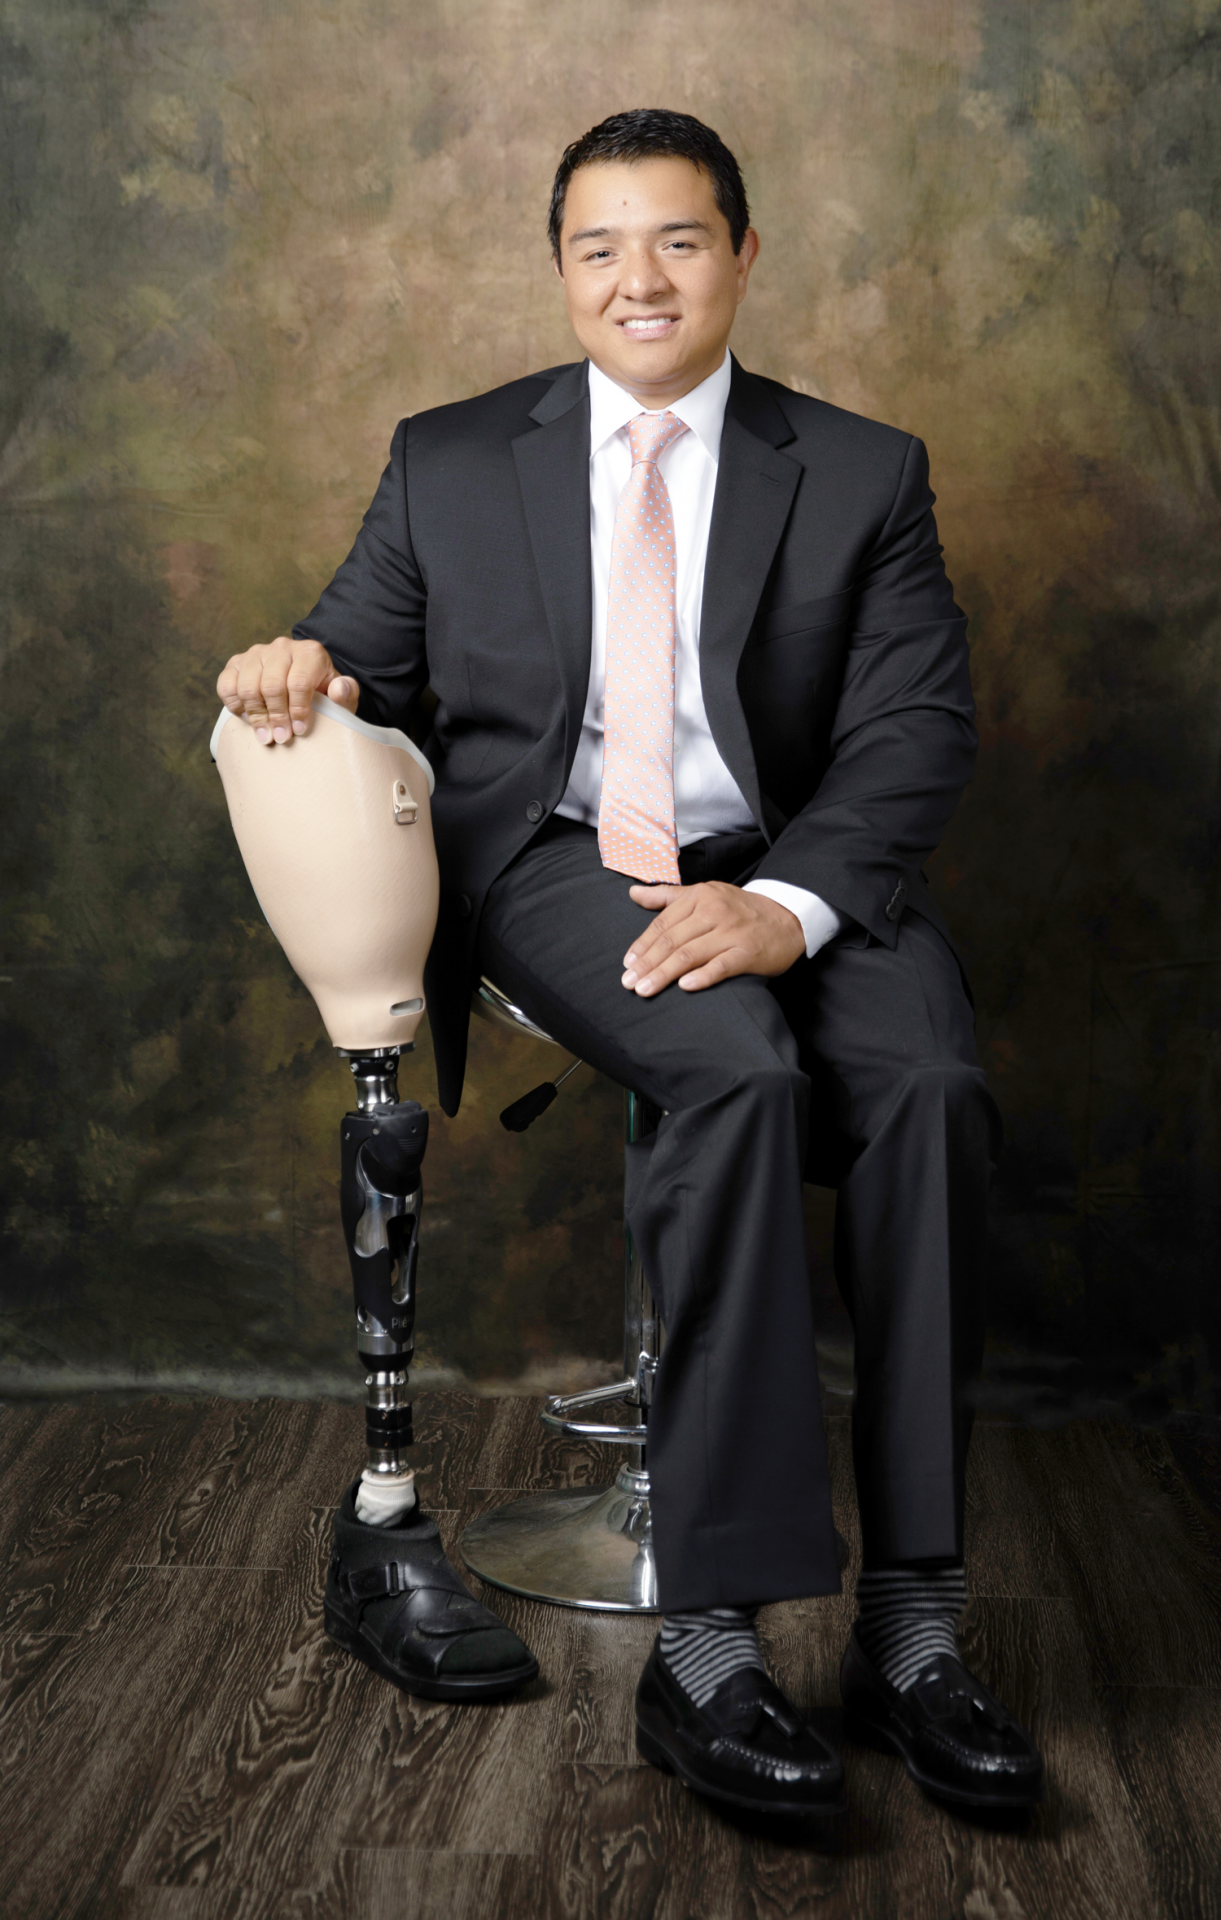 Joe Banda, CEO, The Prosthetic Foundation